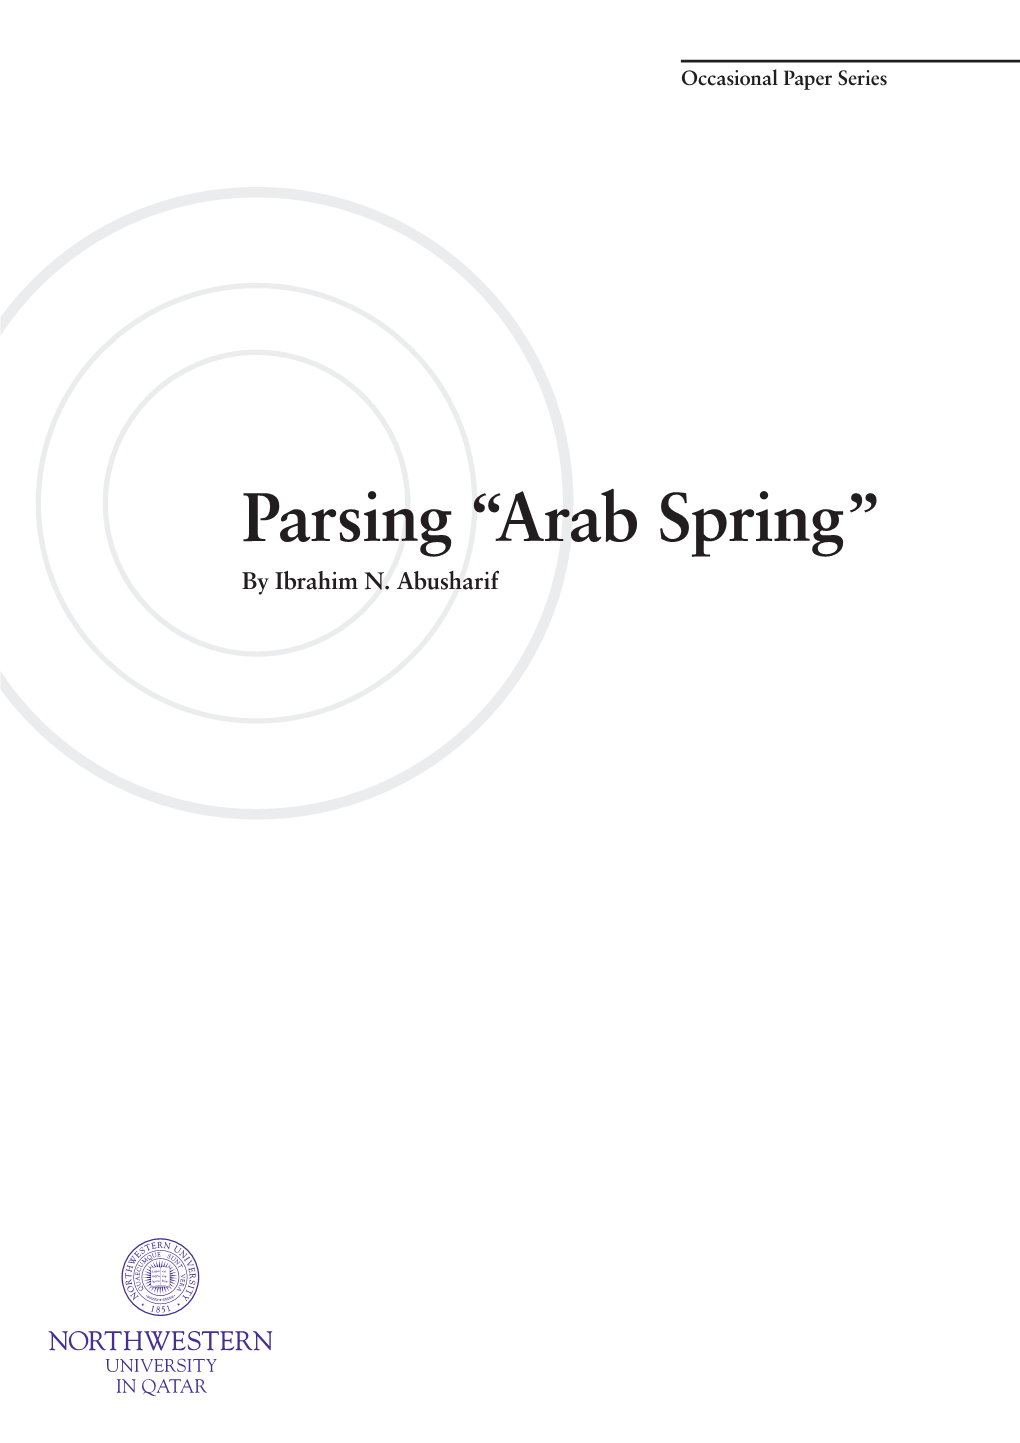 Parsing “Arab Spring” by Ibrahim N